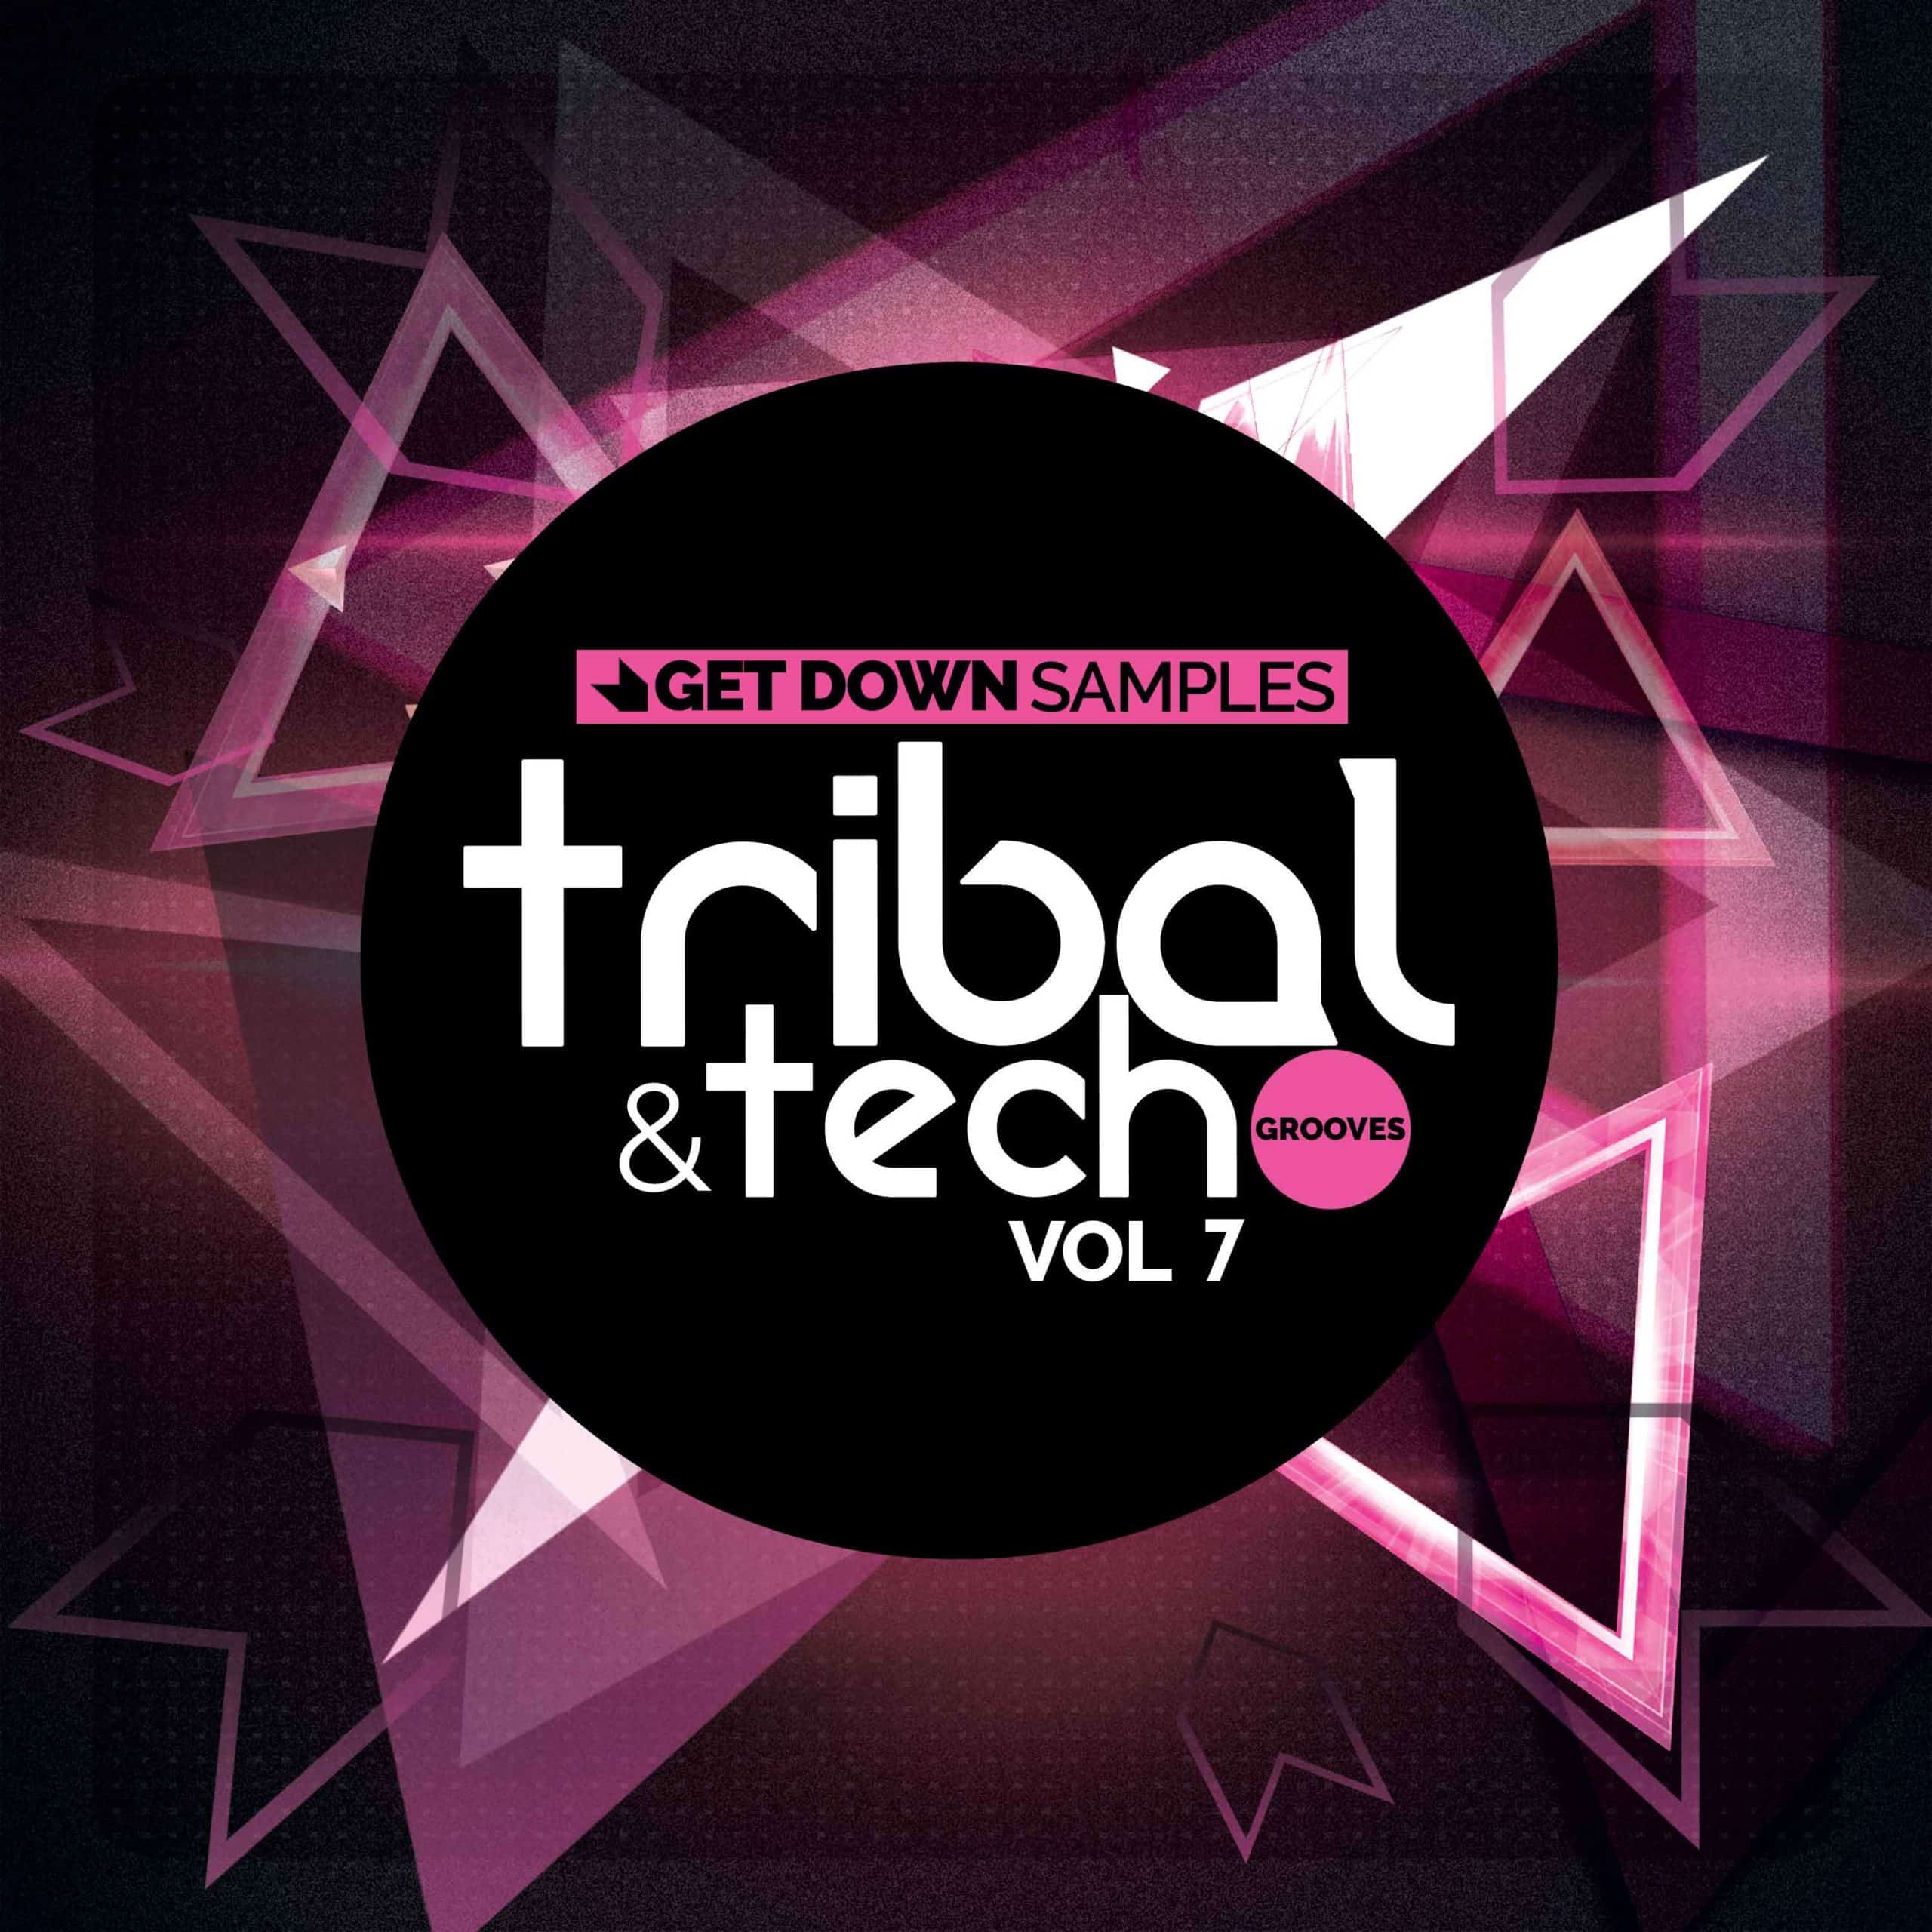 Get Down Samples  – Tech & Tribal Grooves Volume 7